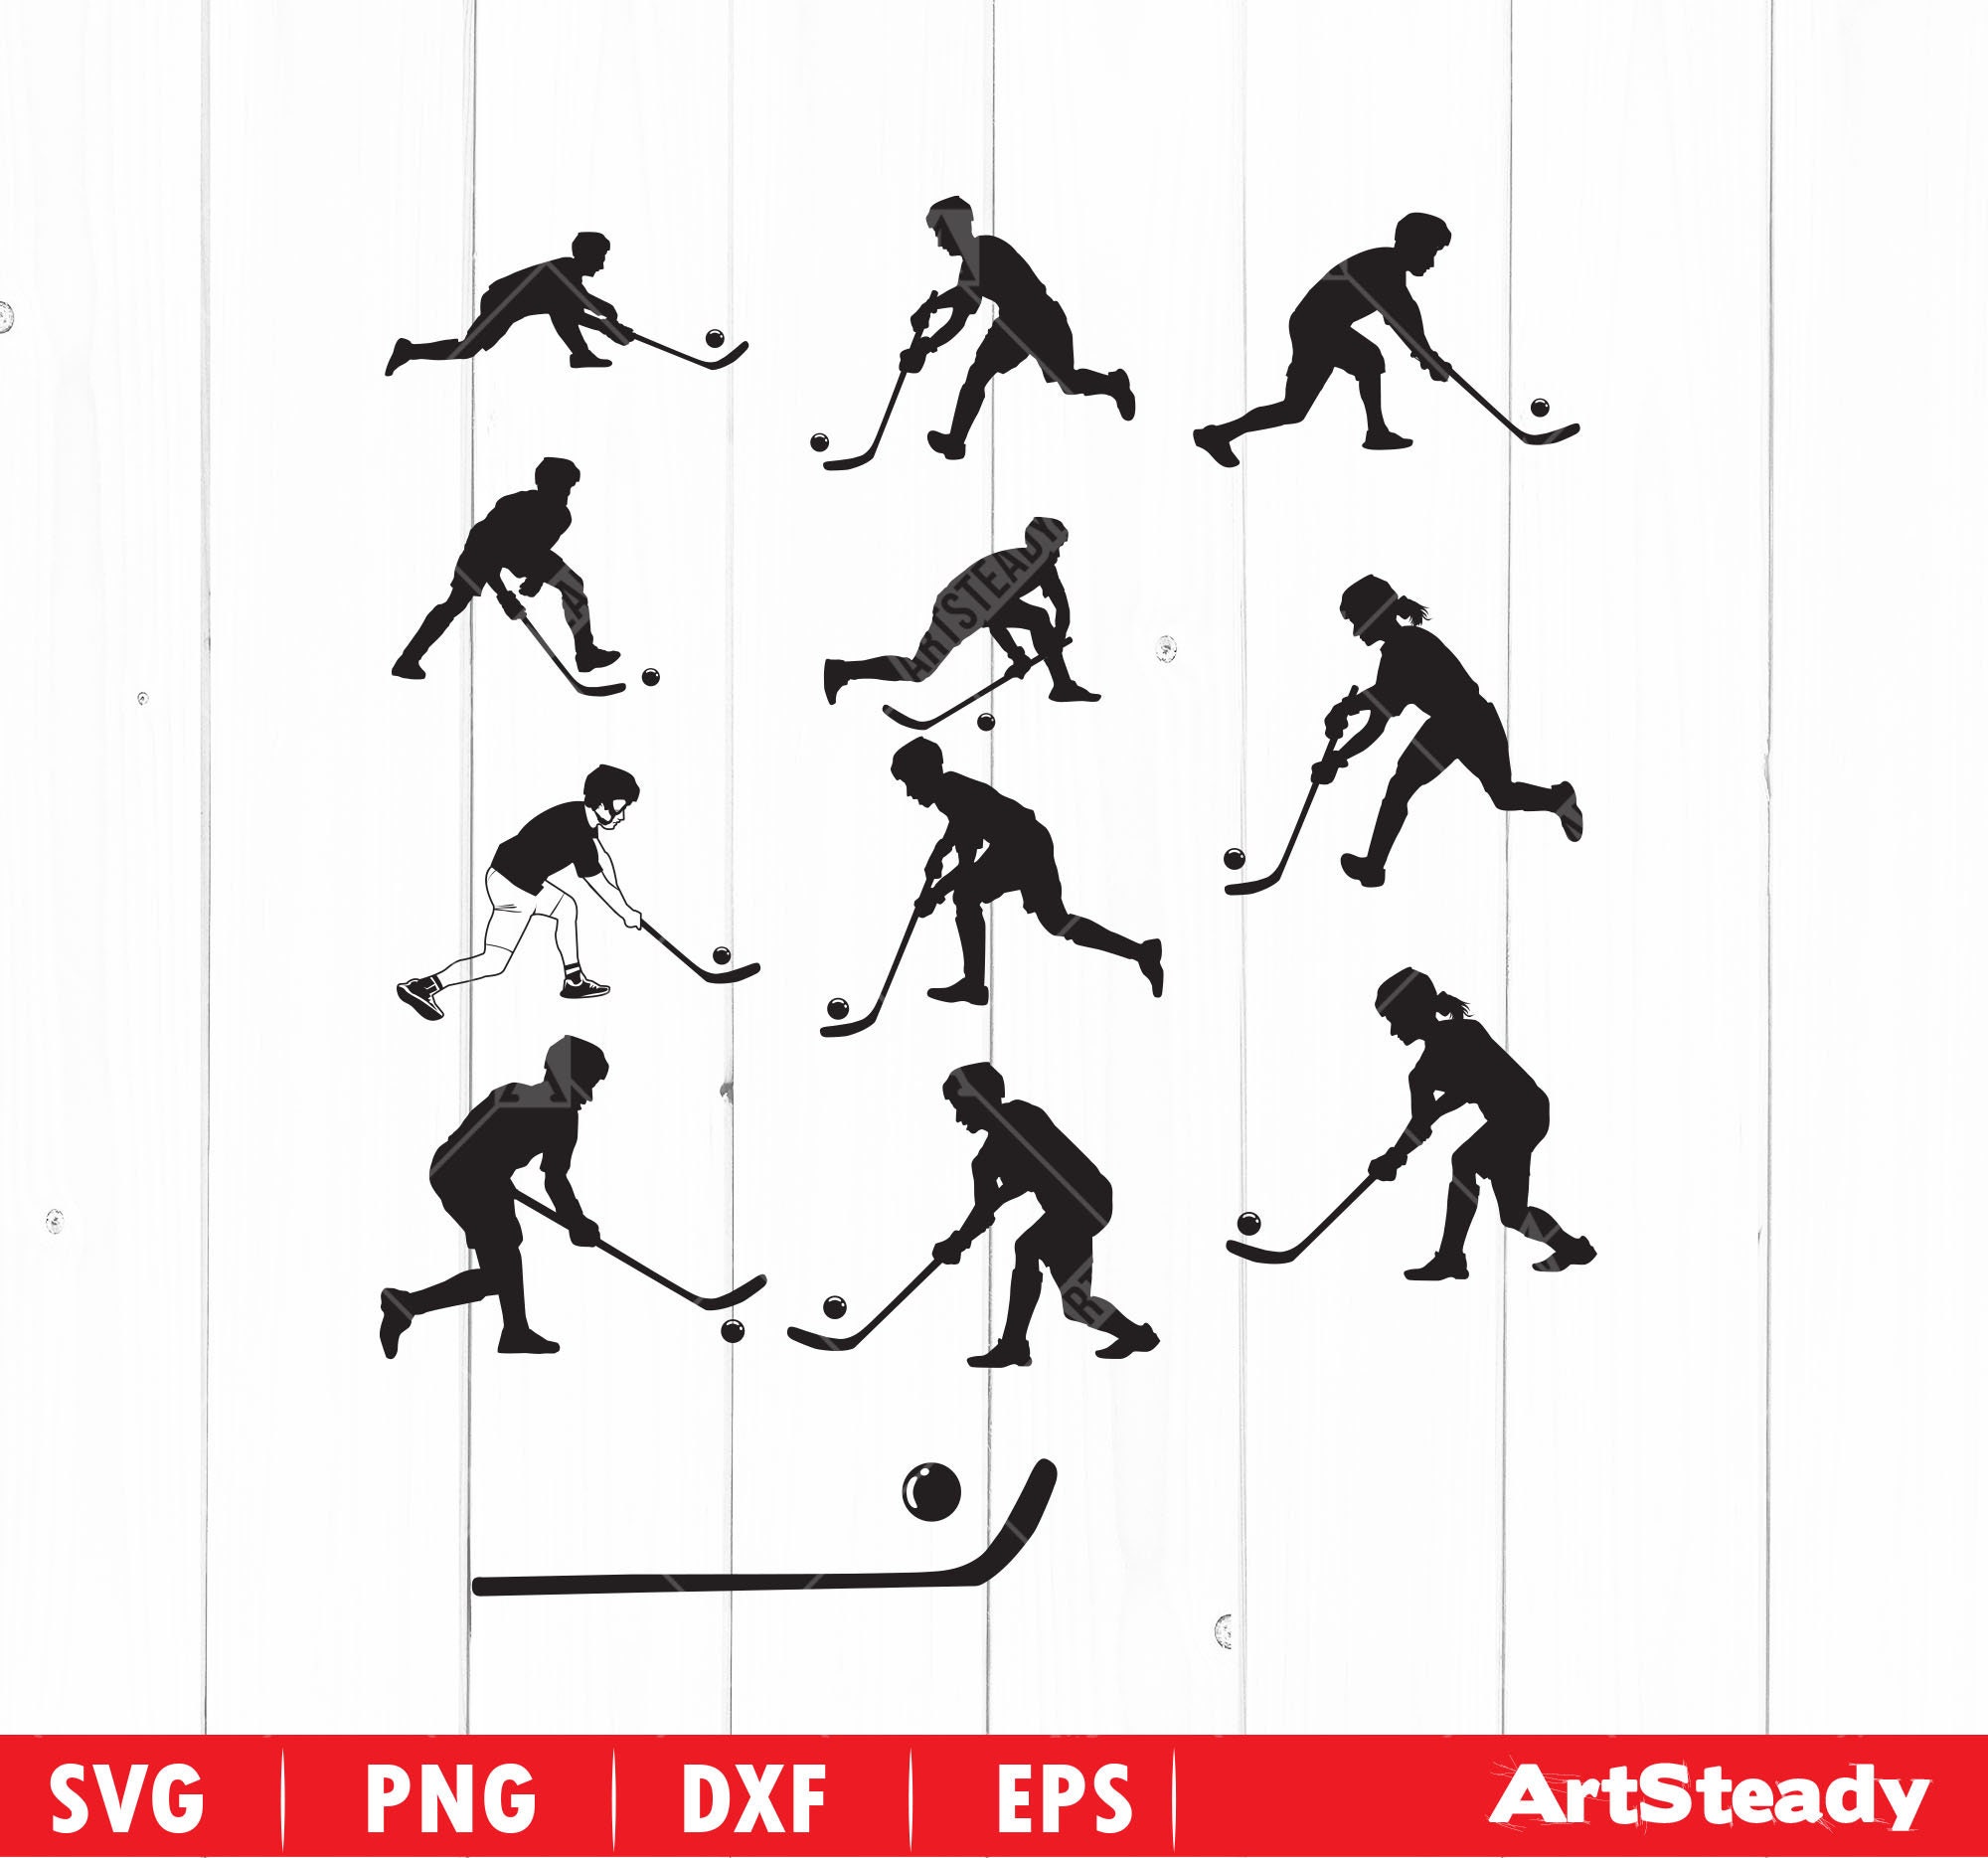 Hockey svg, ice hockey font, hockey letters, sport font svg, sports  alphabet, game day font